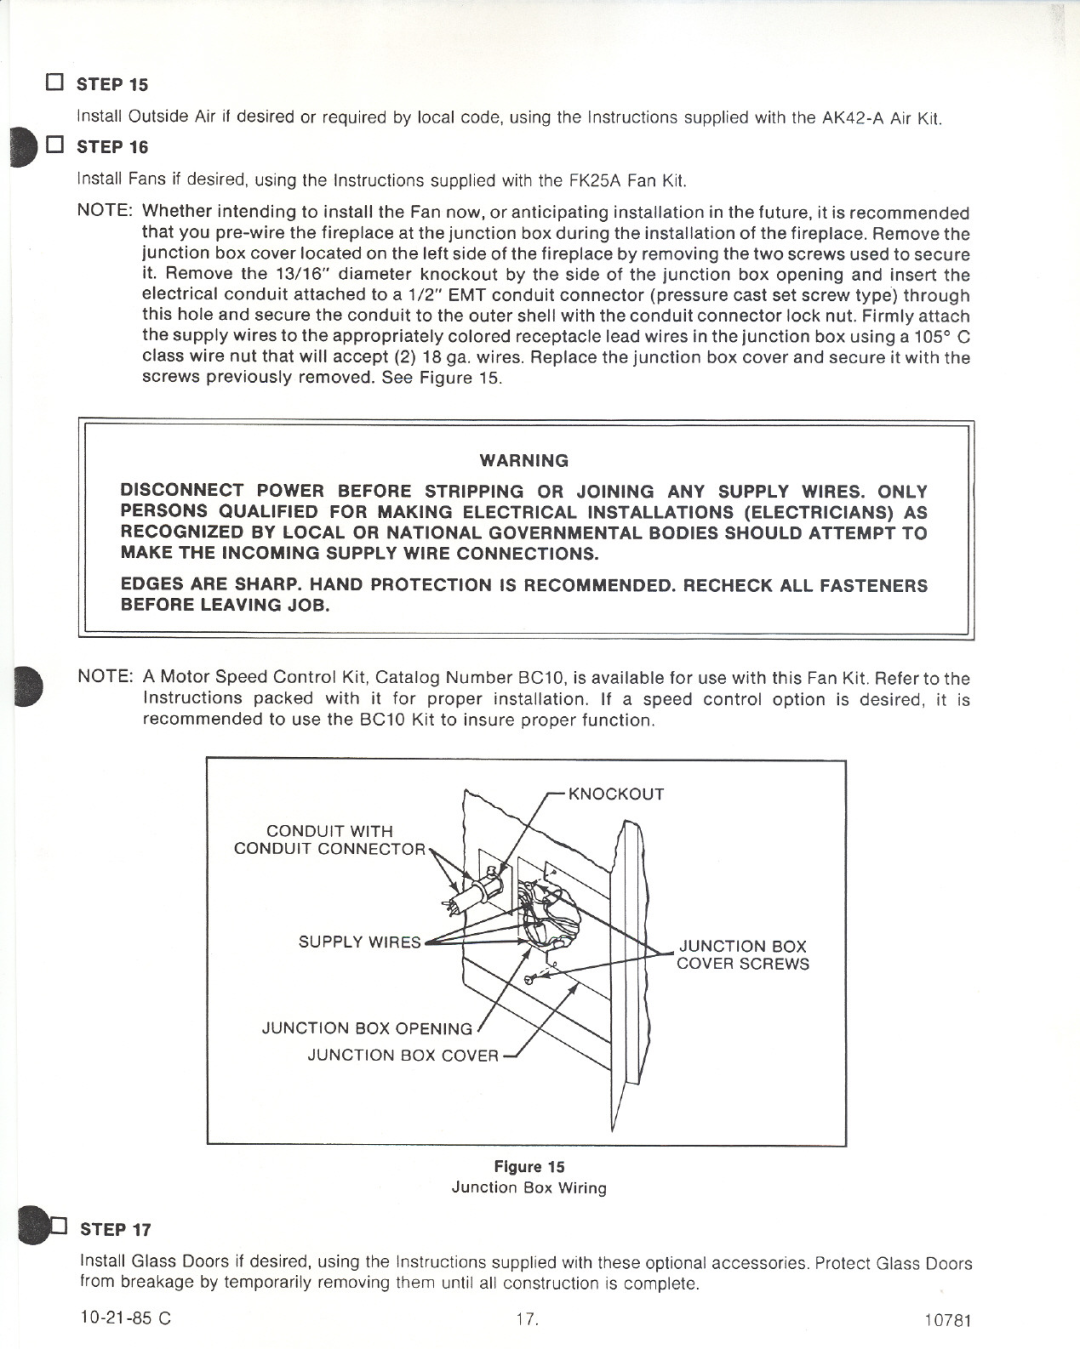 Heatiator HF42A manual 